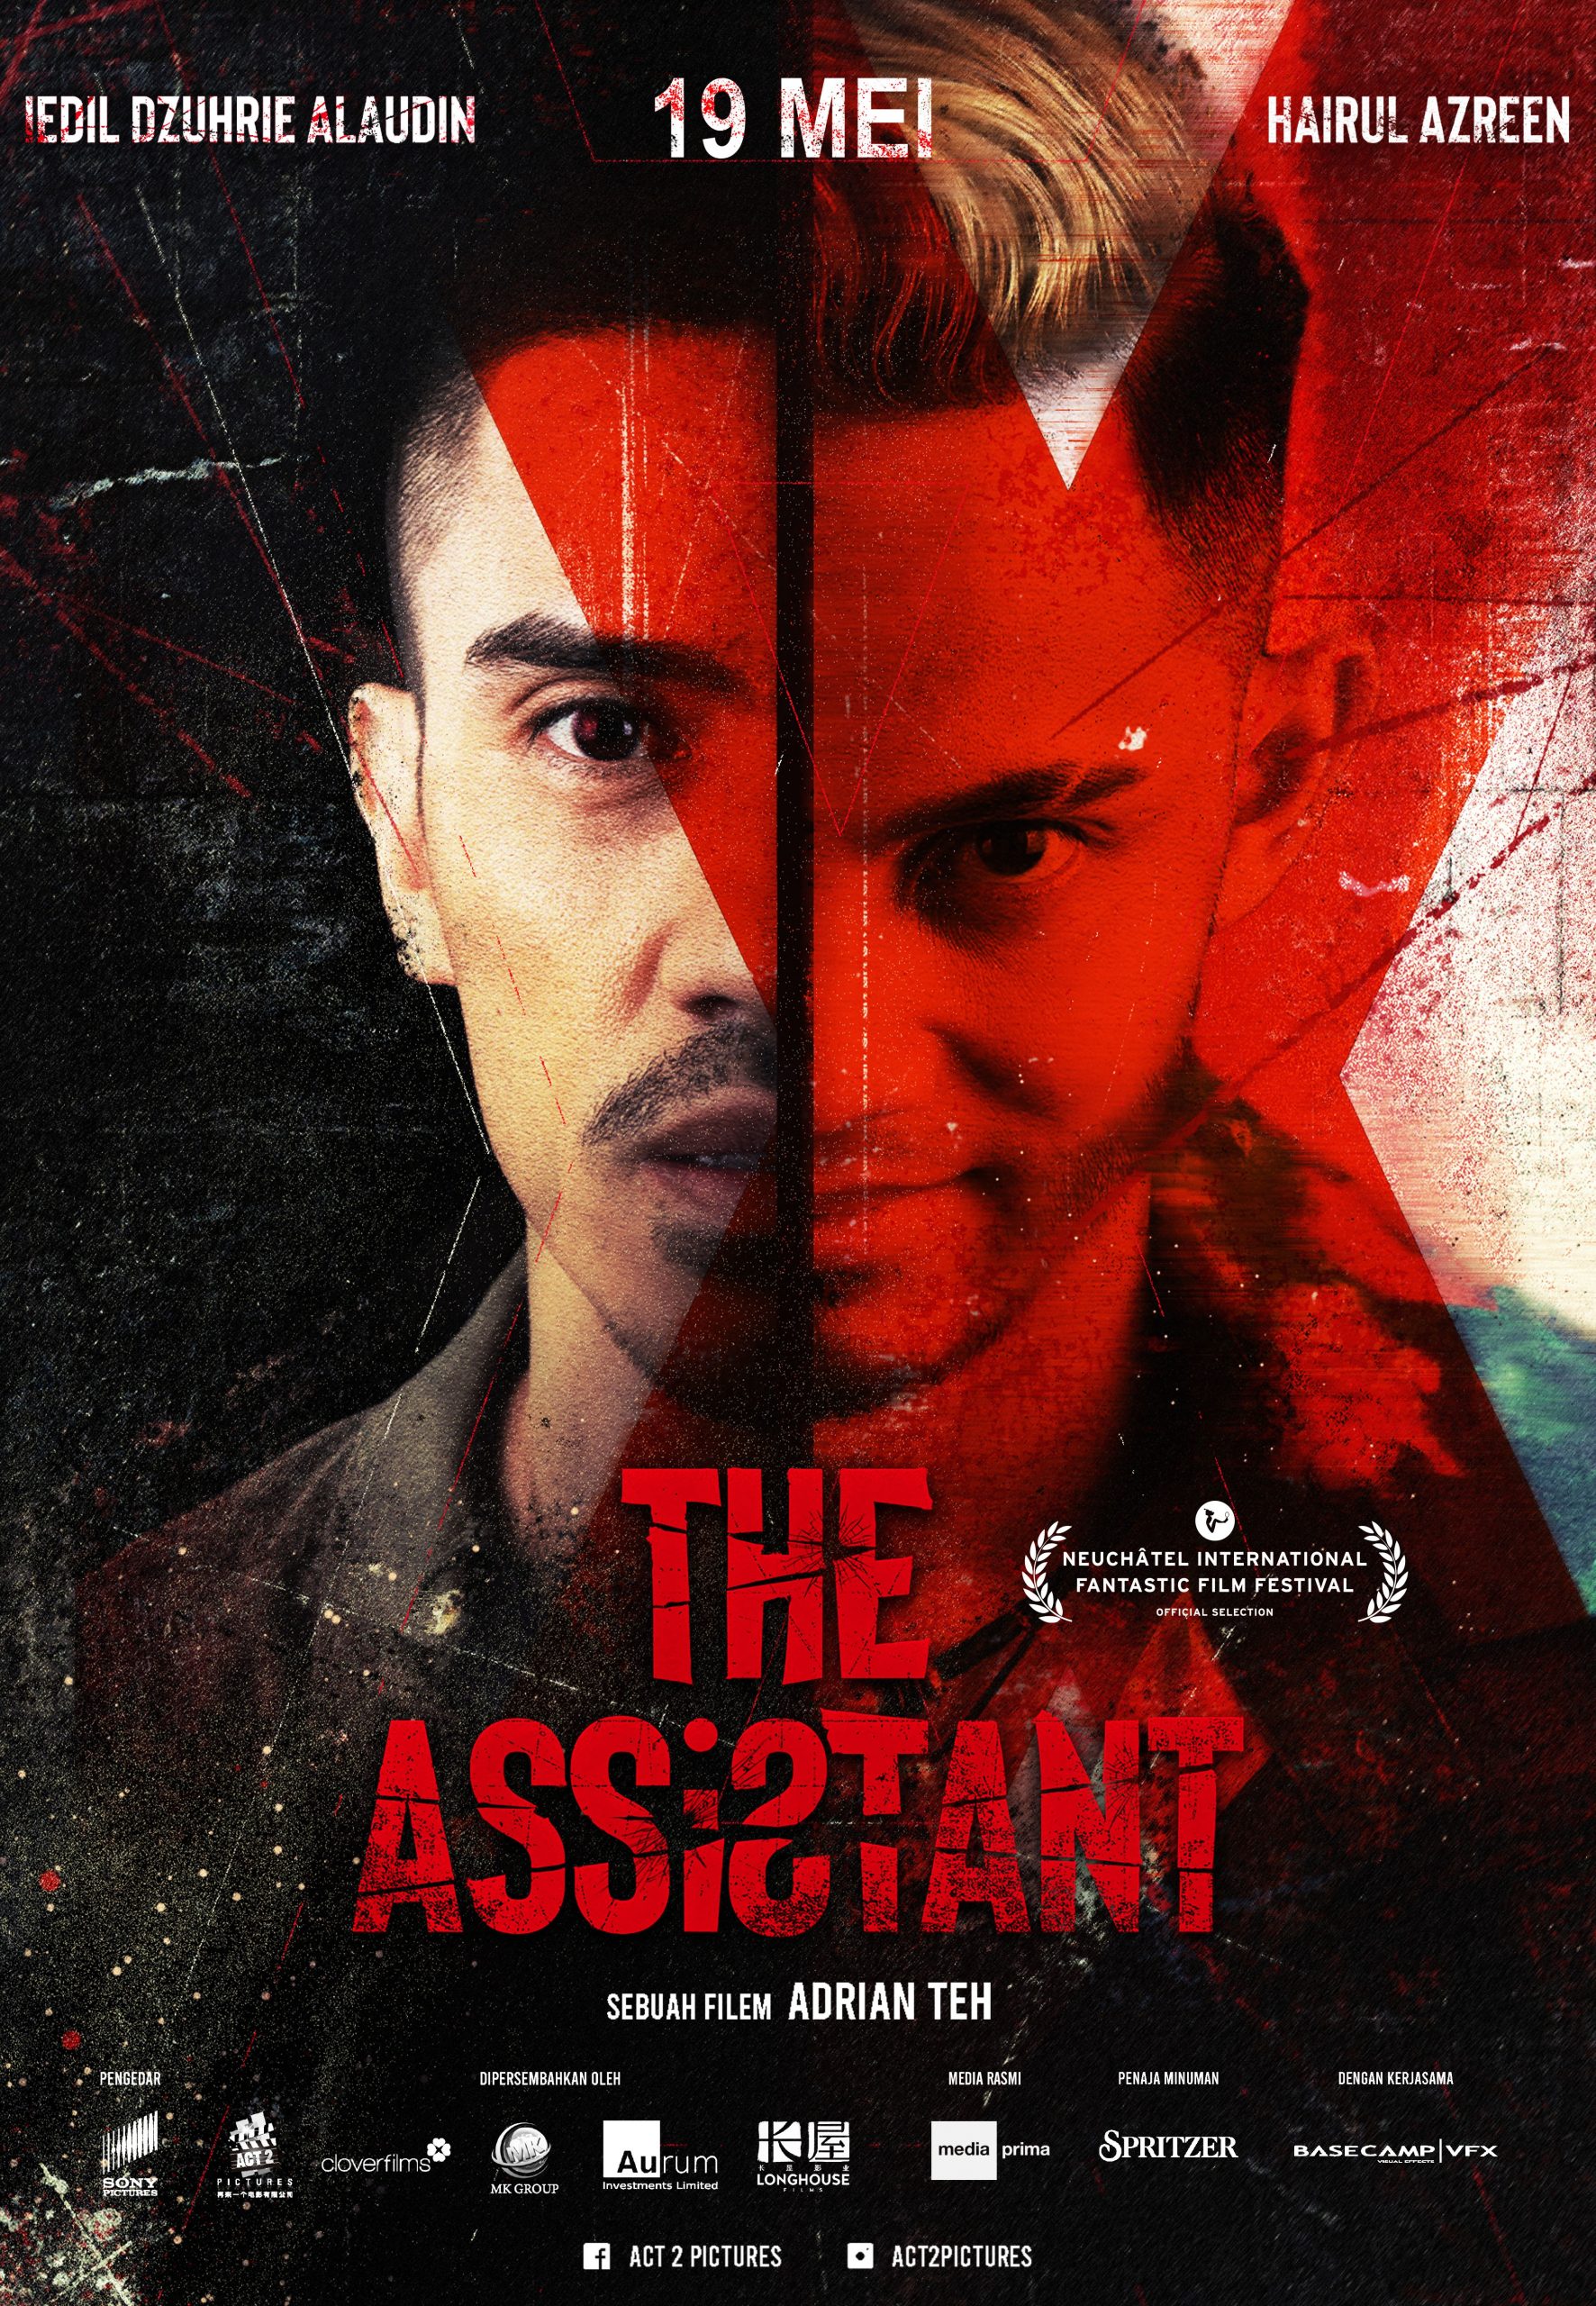  入围远东电影节竞赛单元 《The Assistant》获全球首映